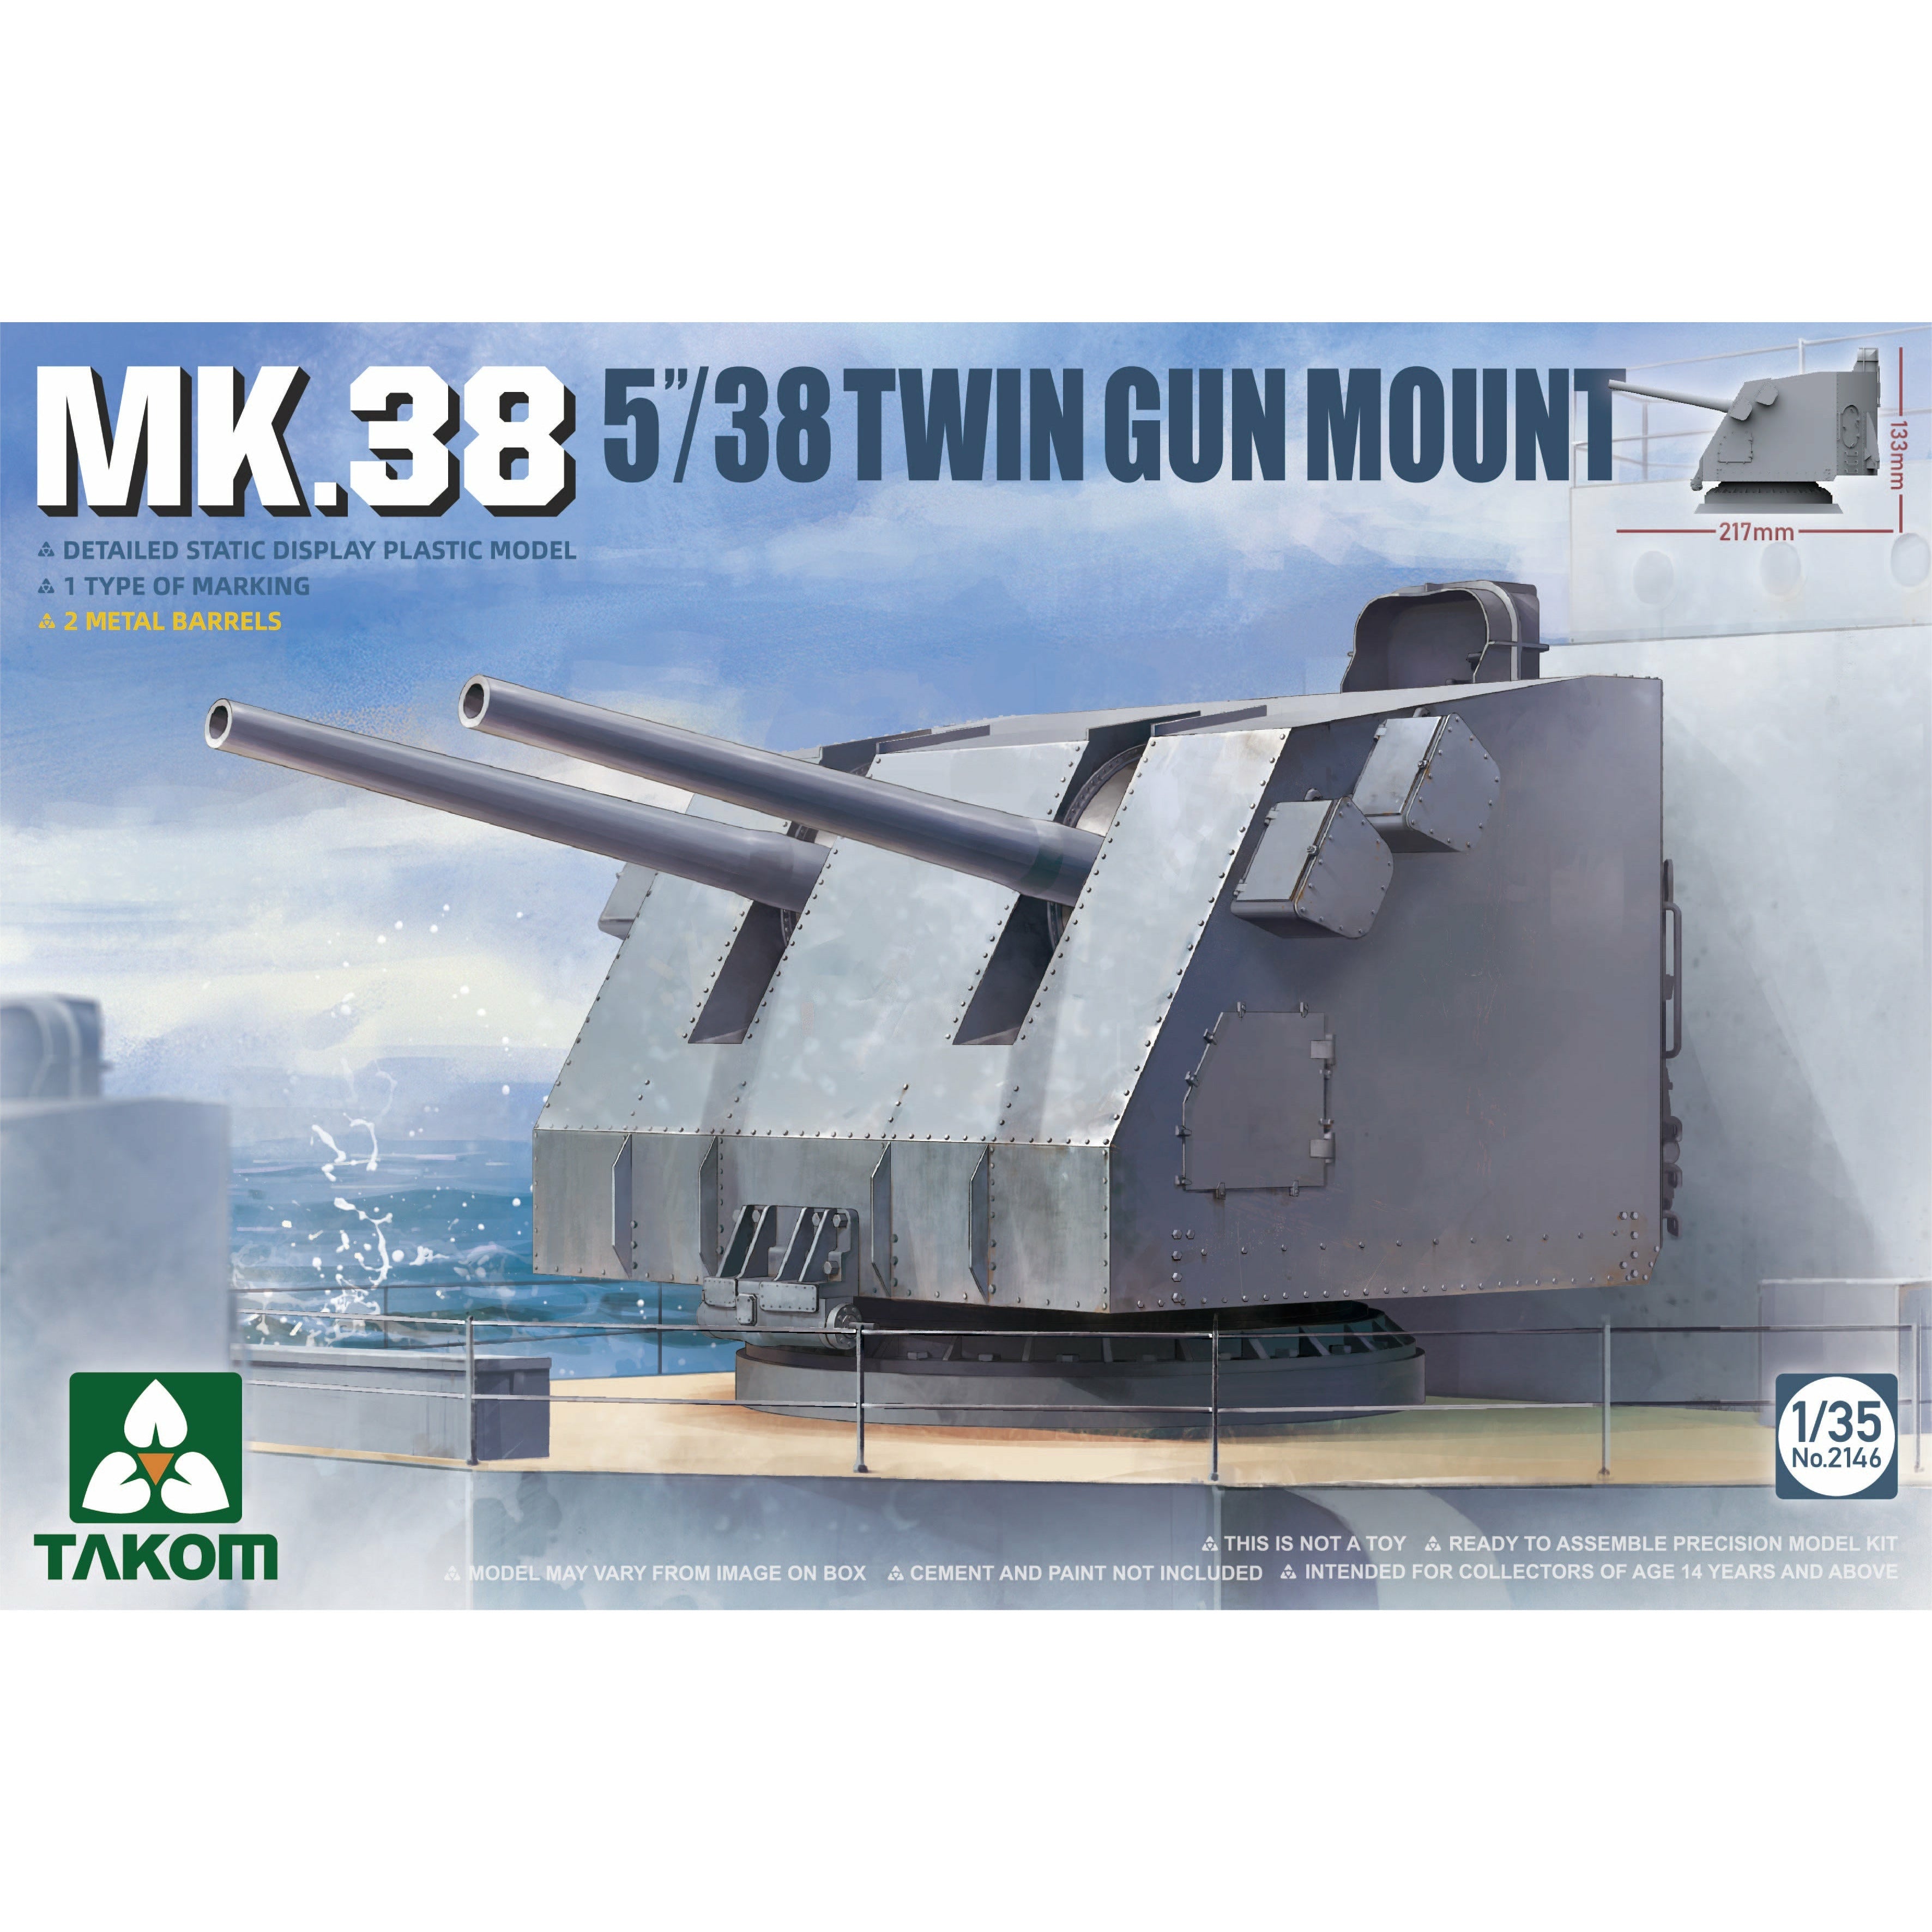 Mk.38 5"/38 Twin Gun Mount (Metal Barrel) 1/35 #2146 by Takom